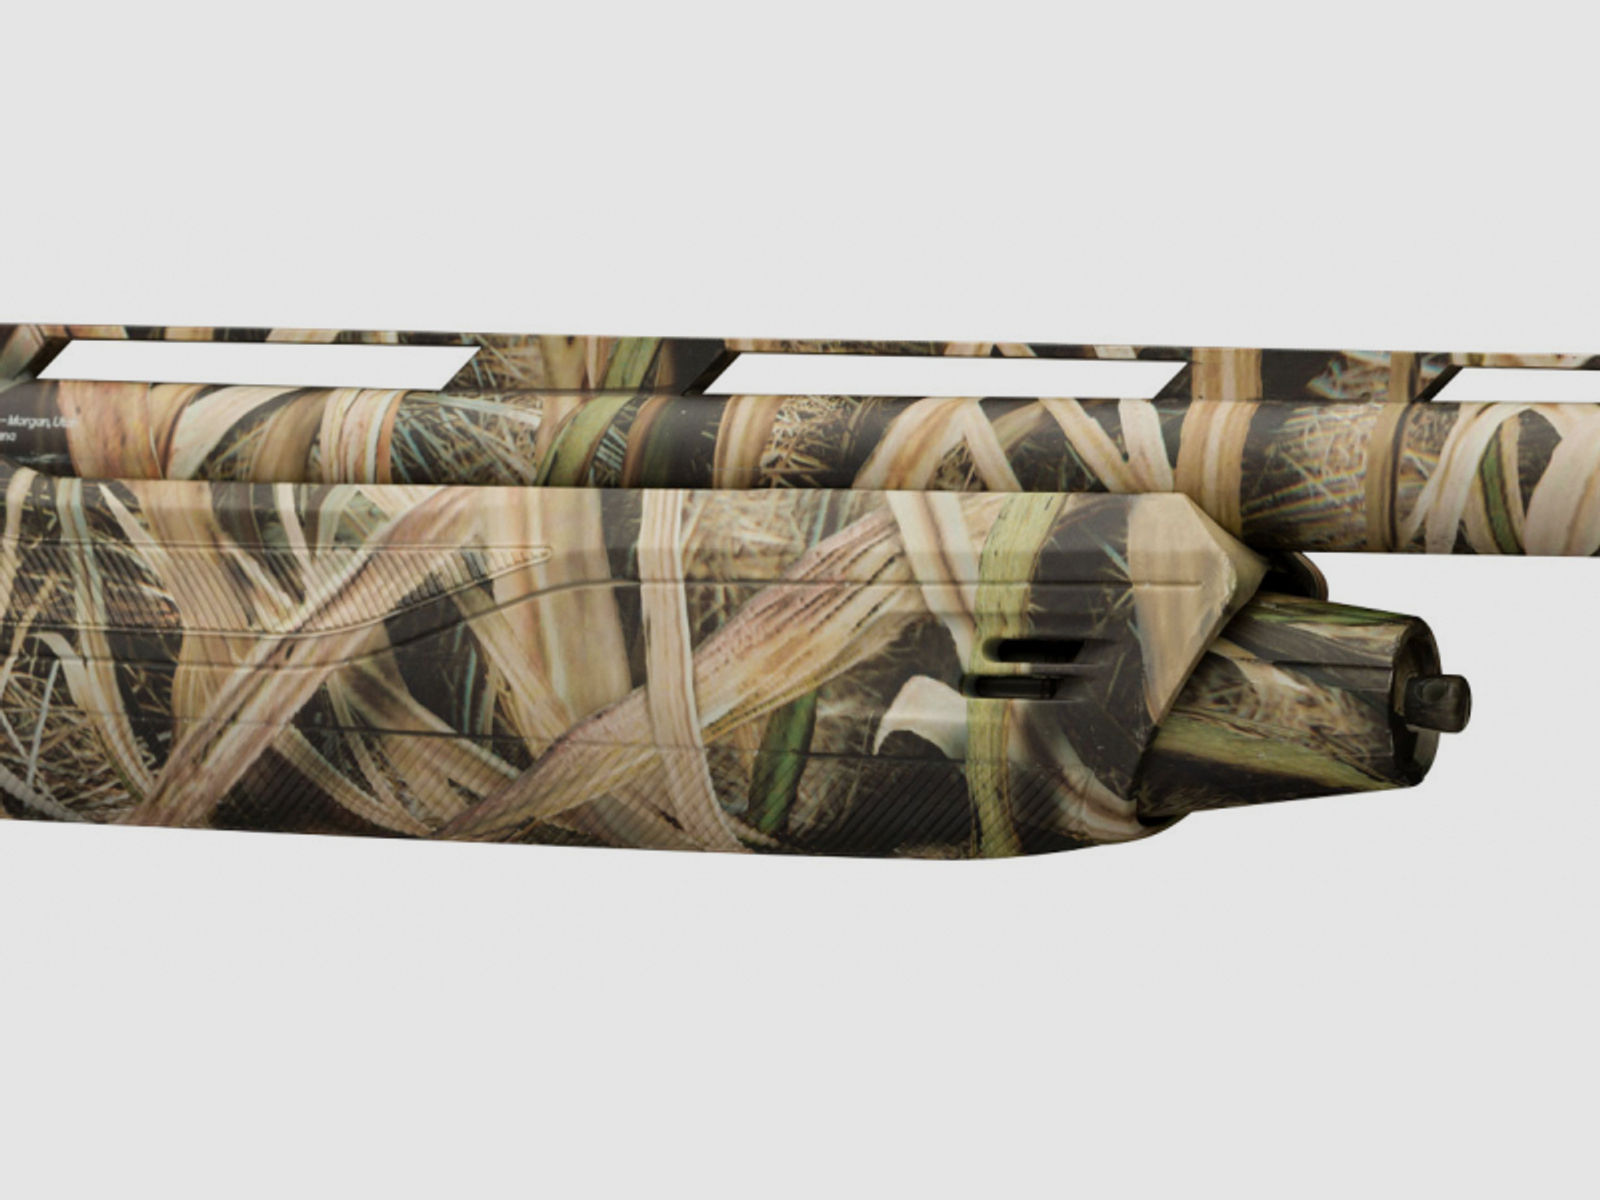 Selbstladeflinte Winchester SX4 Kaliber 20/76 Camo Waterfowl